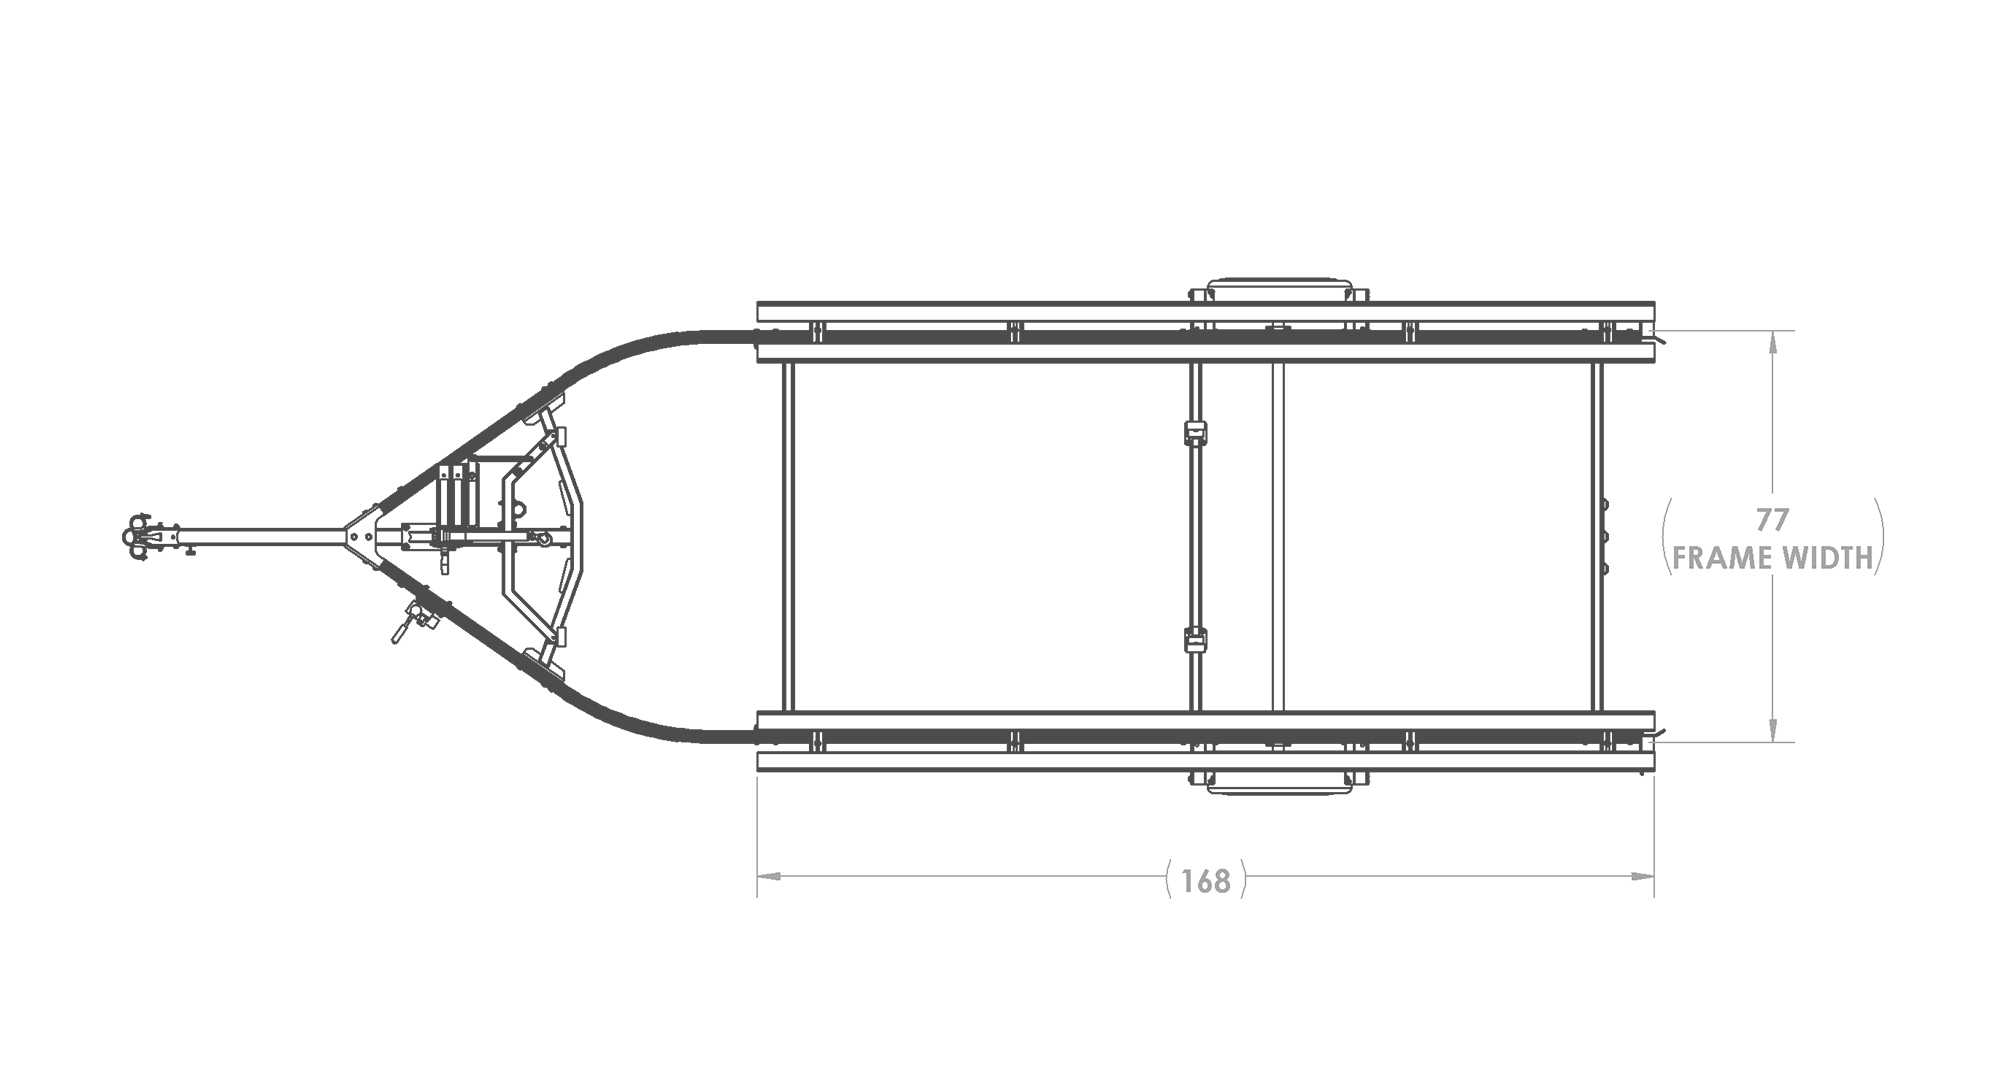 Karavan Trailer's Single Axel Aluminum Pontoon Trailer, model number KDPA-1618, Top View Measurement